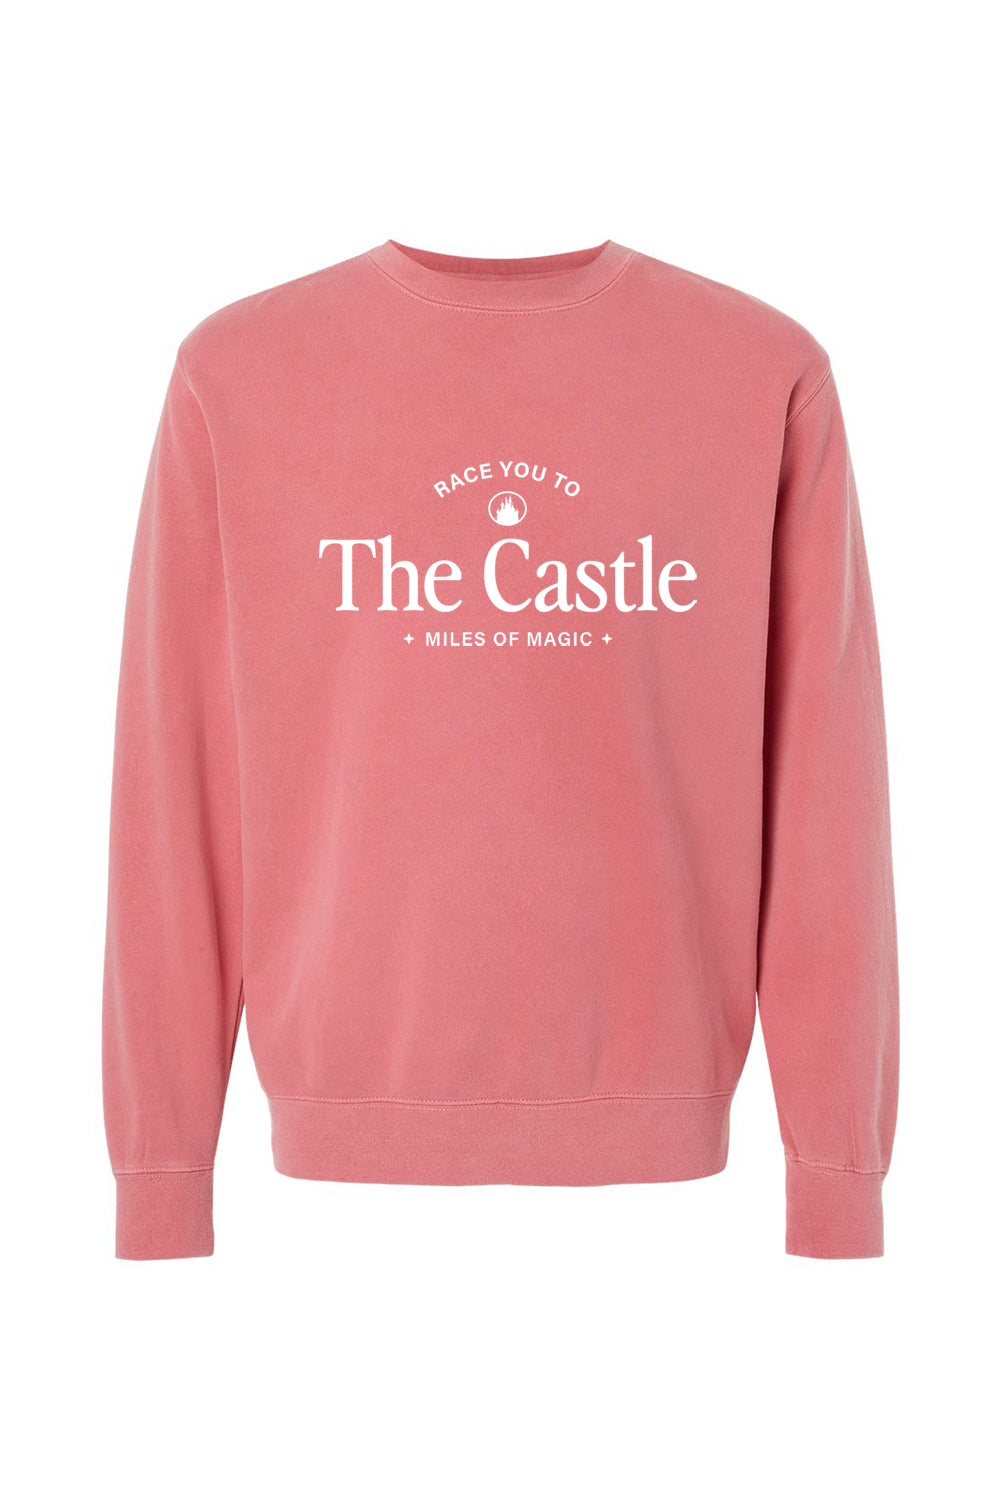 The Castle Sweatshirt